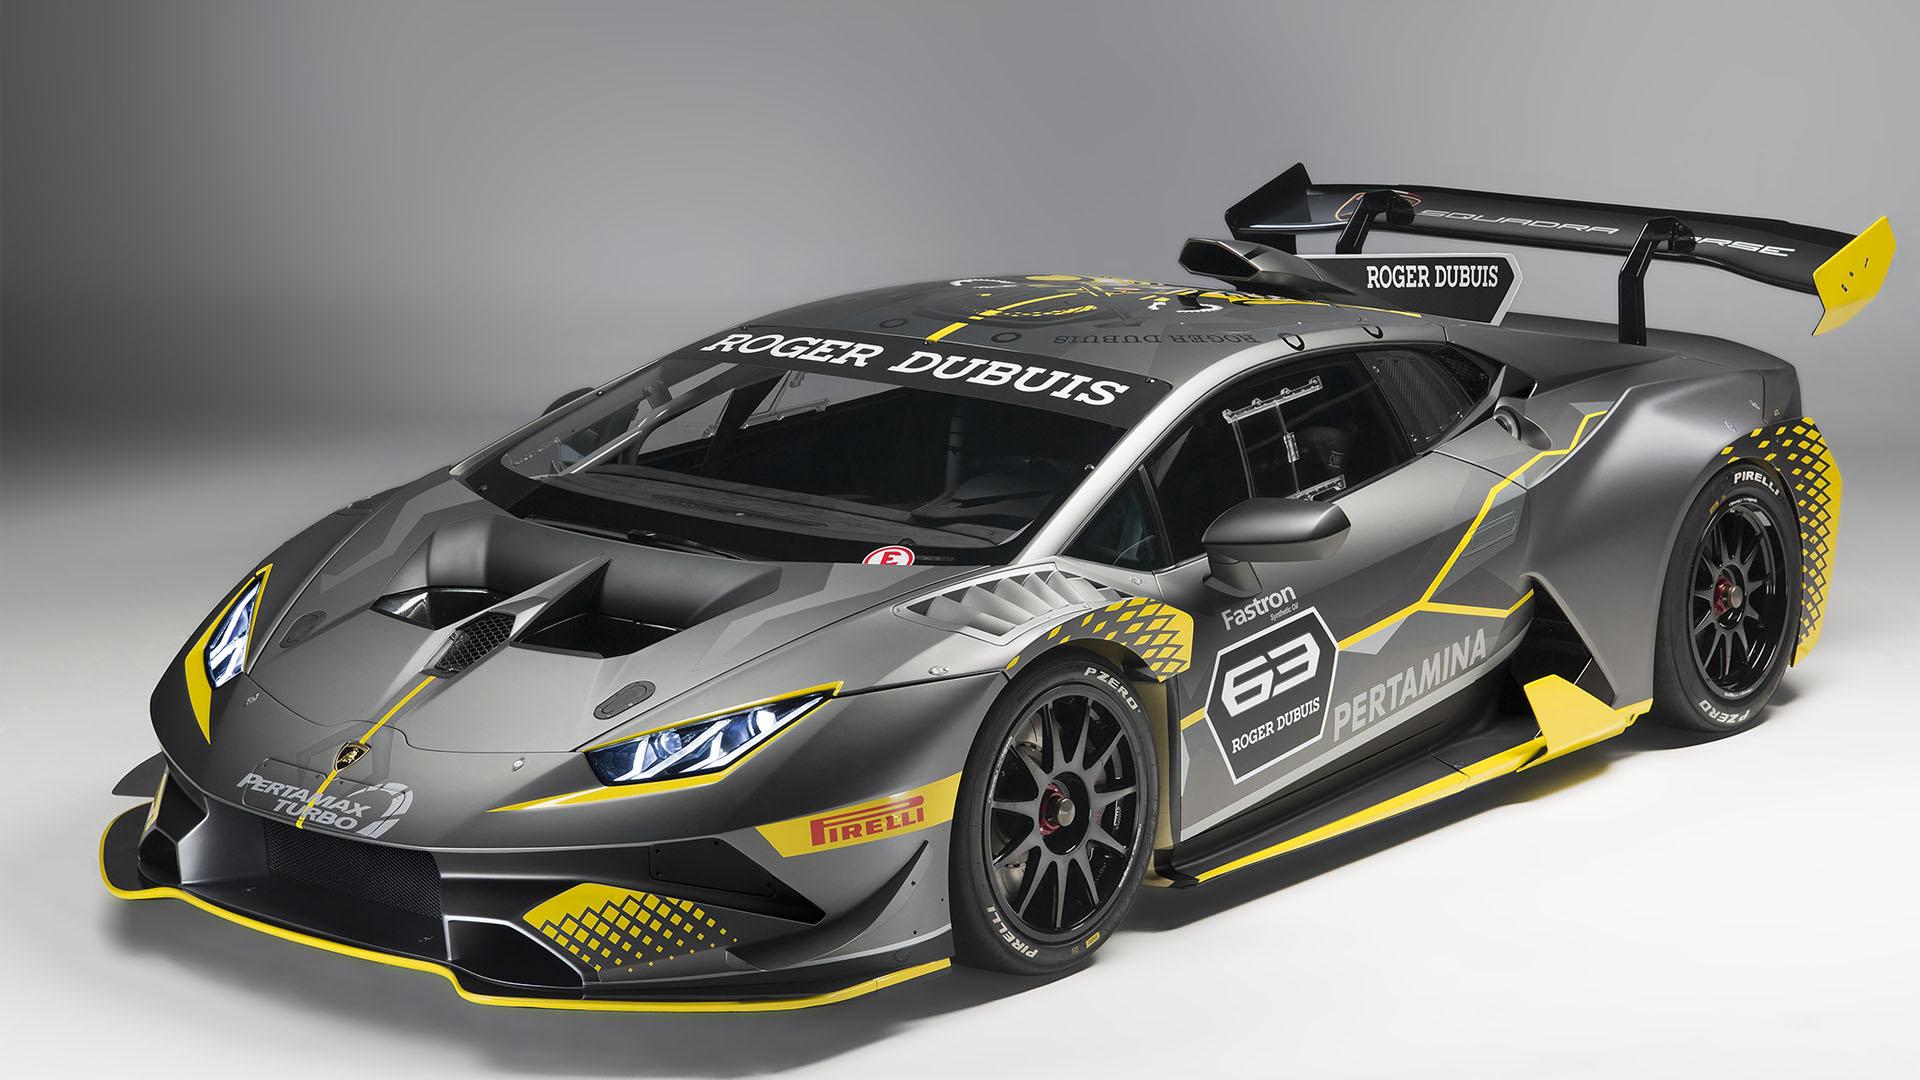 The 2017 Lamborghini Huracán Super Trofeo EVO and a partnership with Roger Dubuis